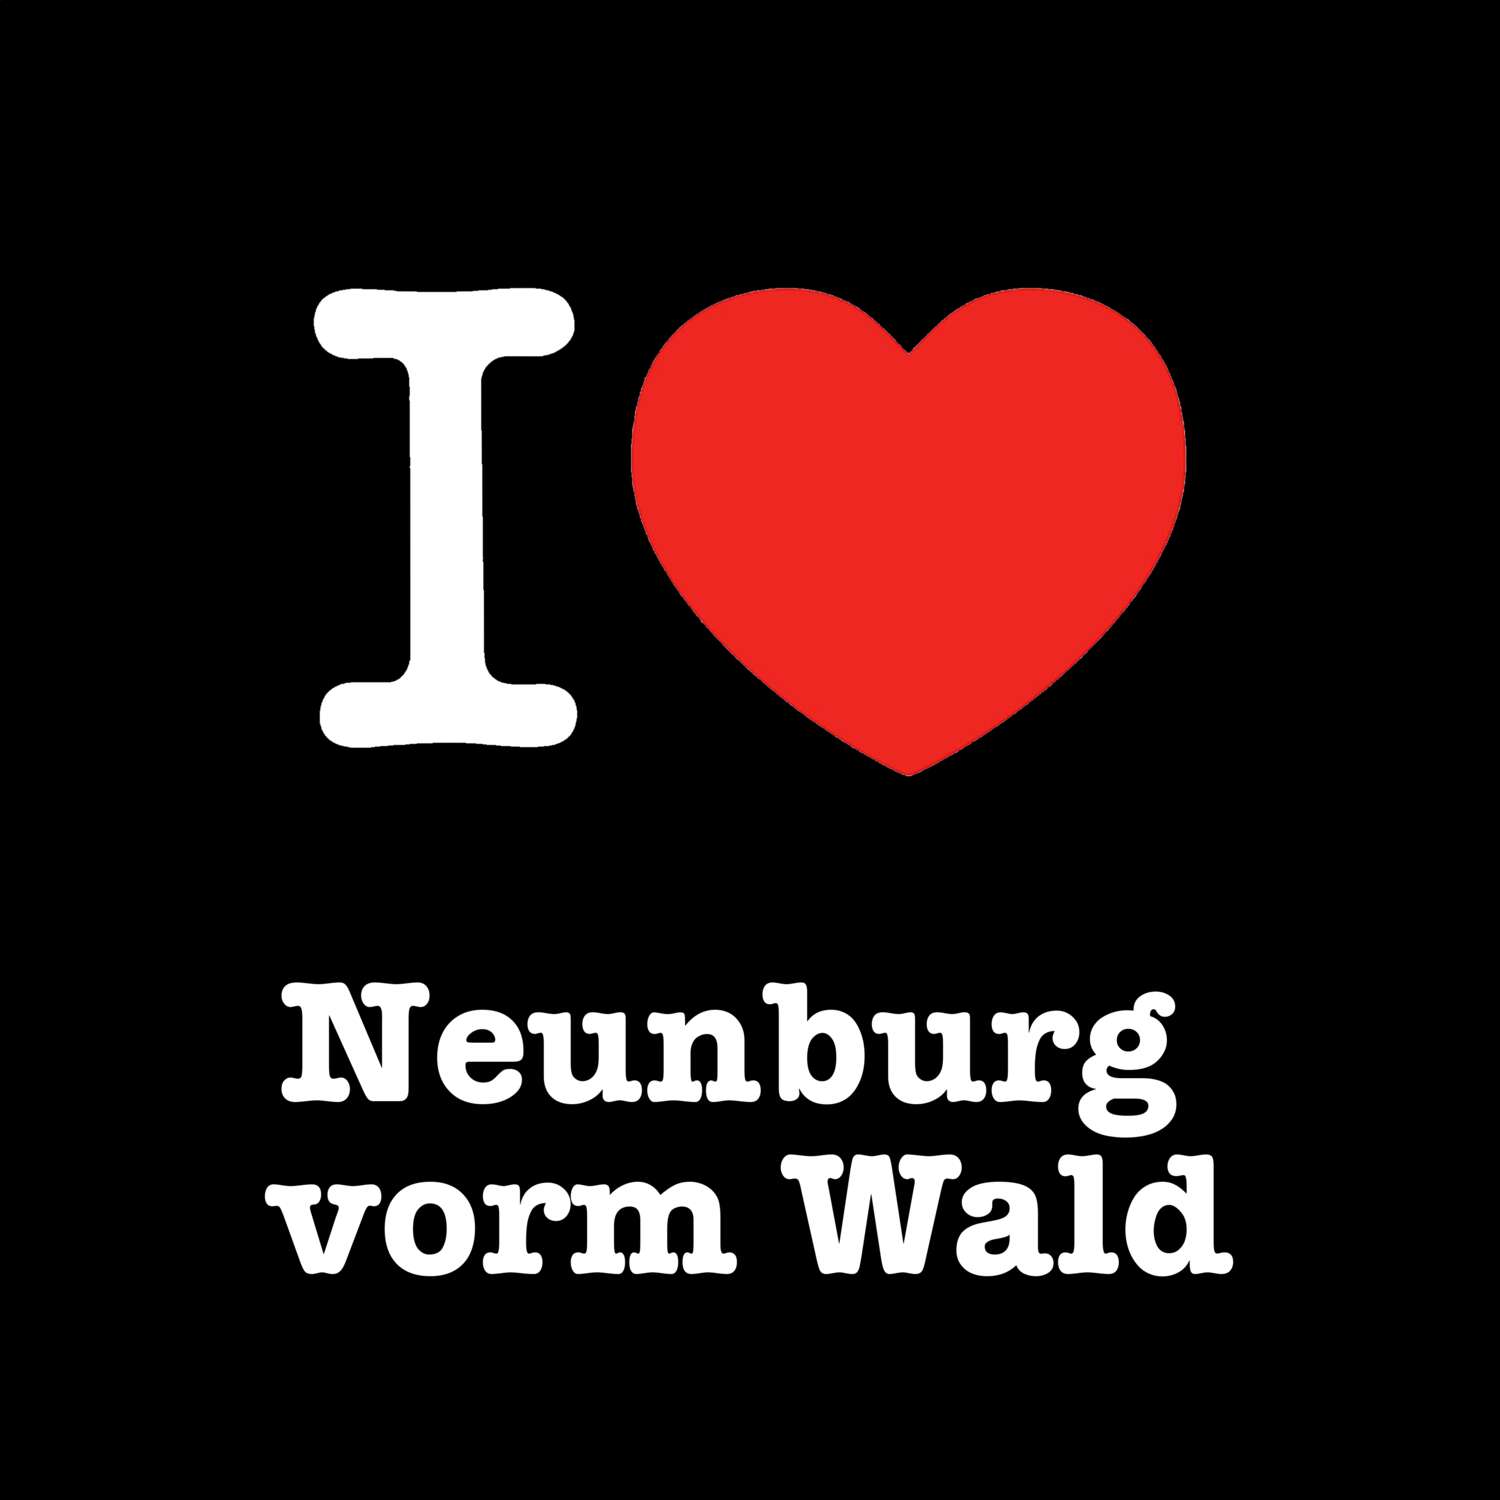 Neunburg vorm Wald T-Shirt »I love«